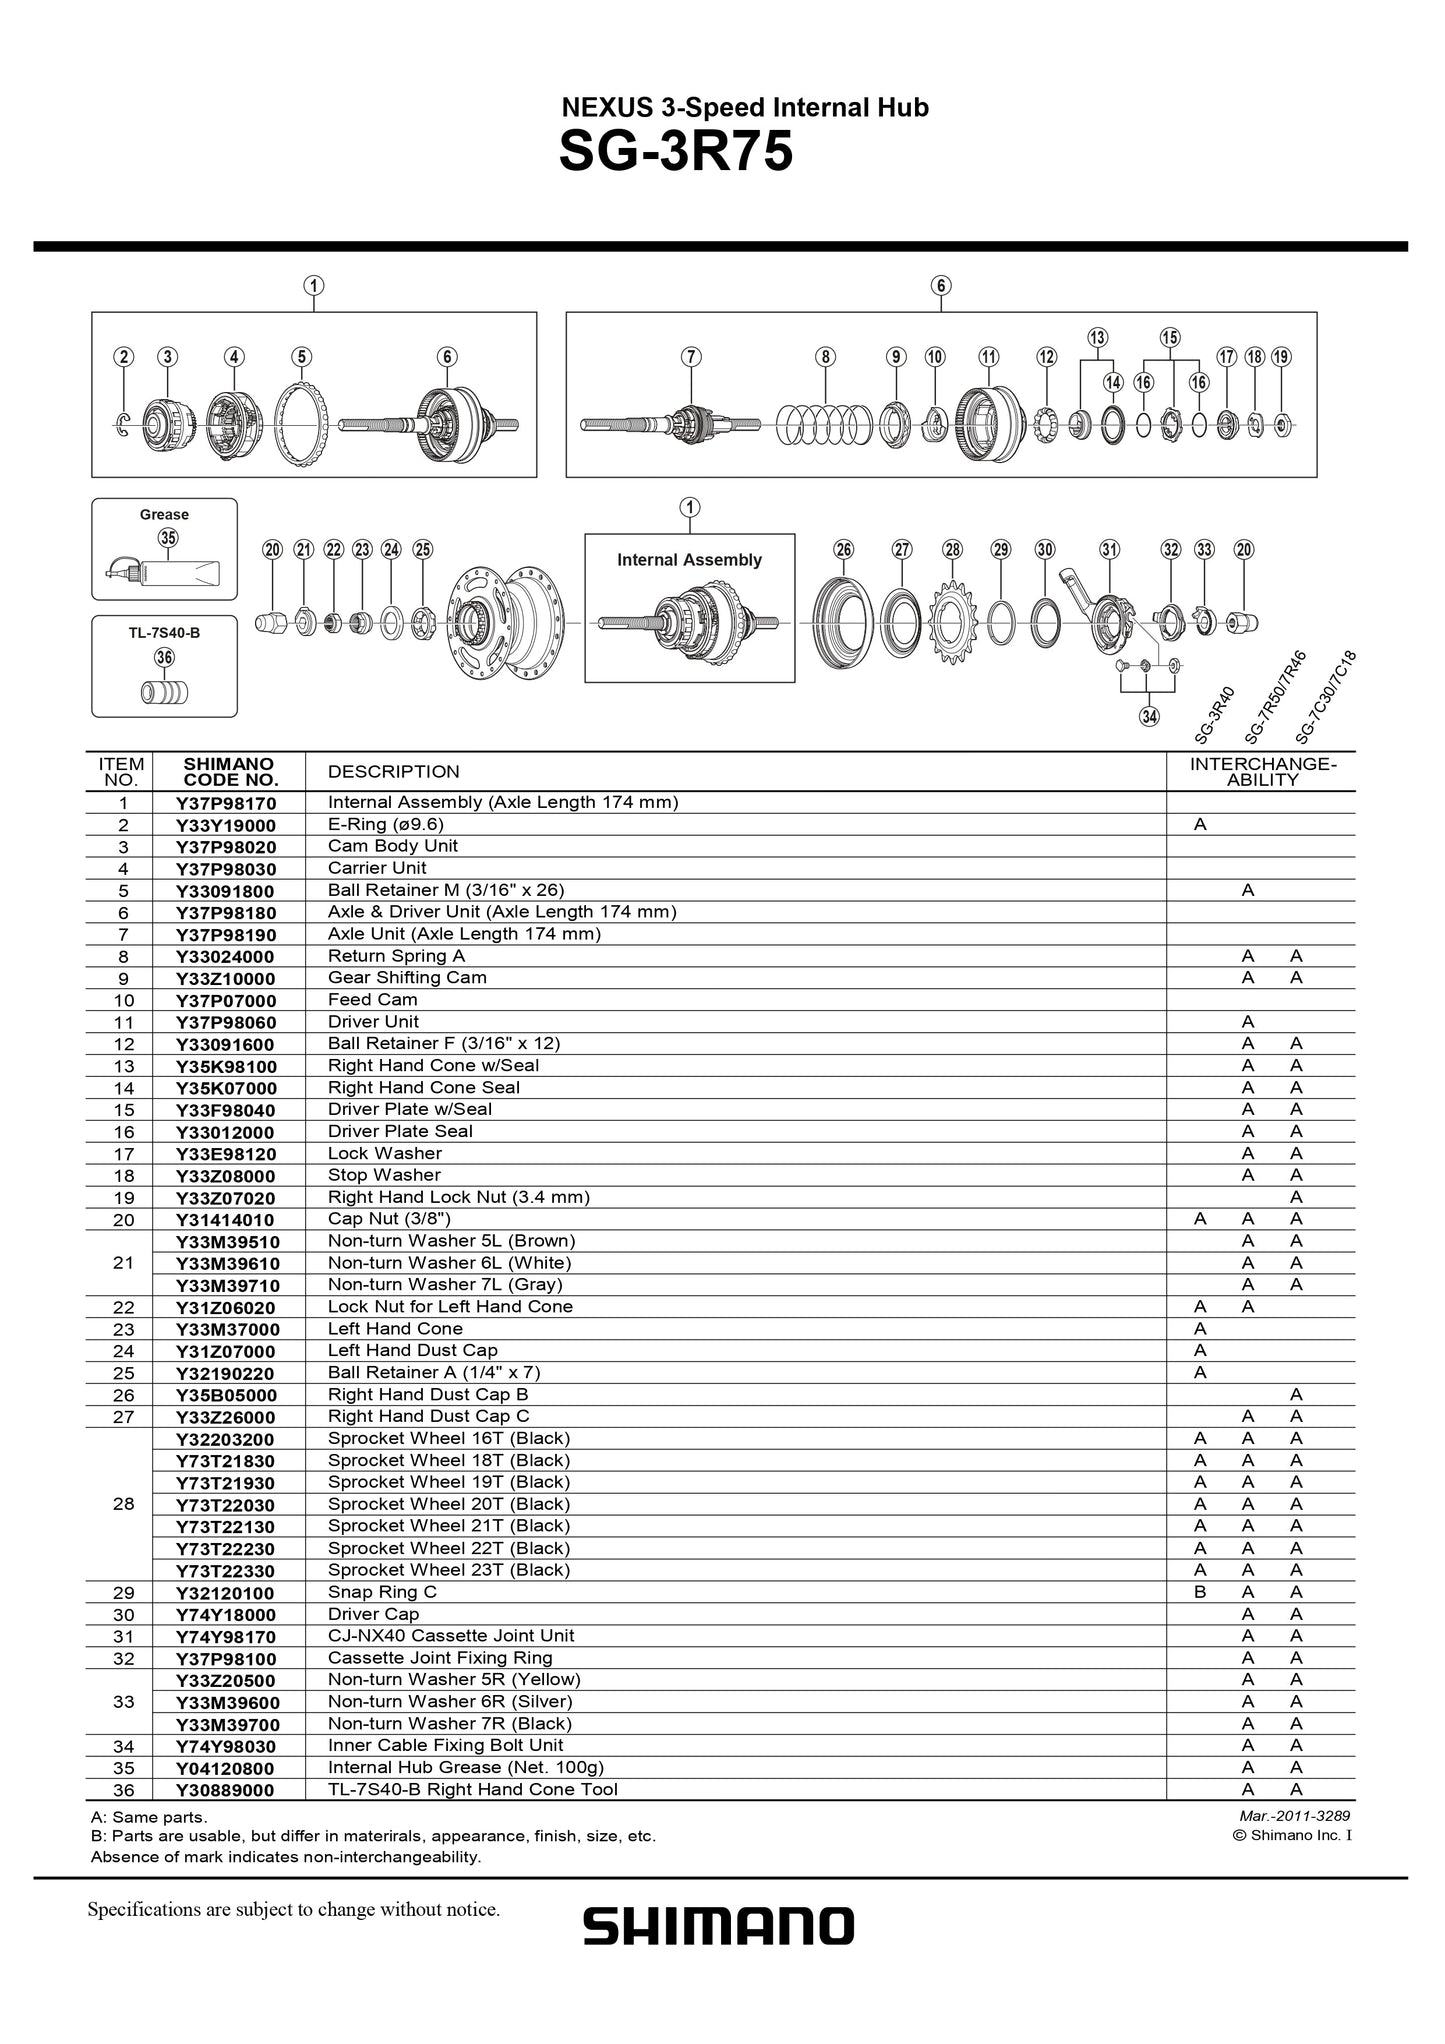 SHIMANO Nexus SG-3R75 Internal Hub 3-Speed Lock Nut - Y32139040-Pit Crew Cycles